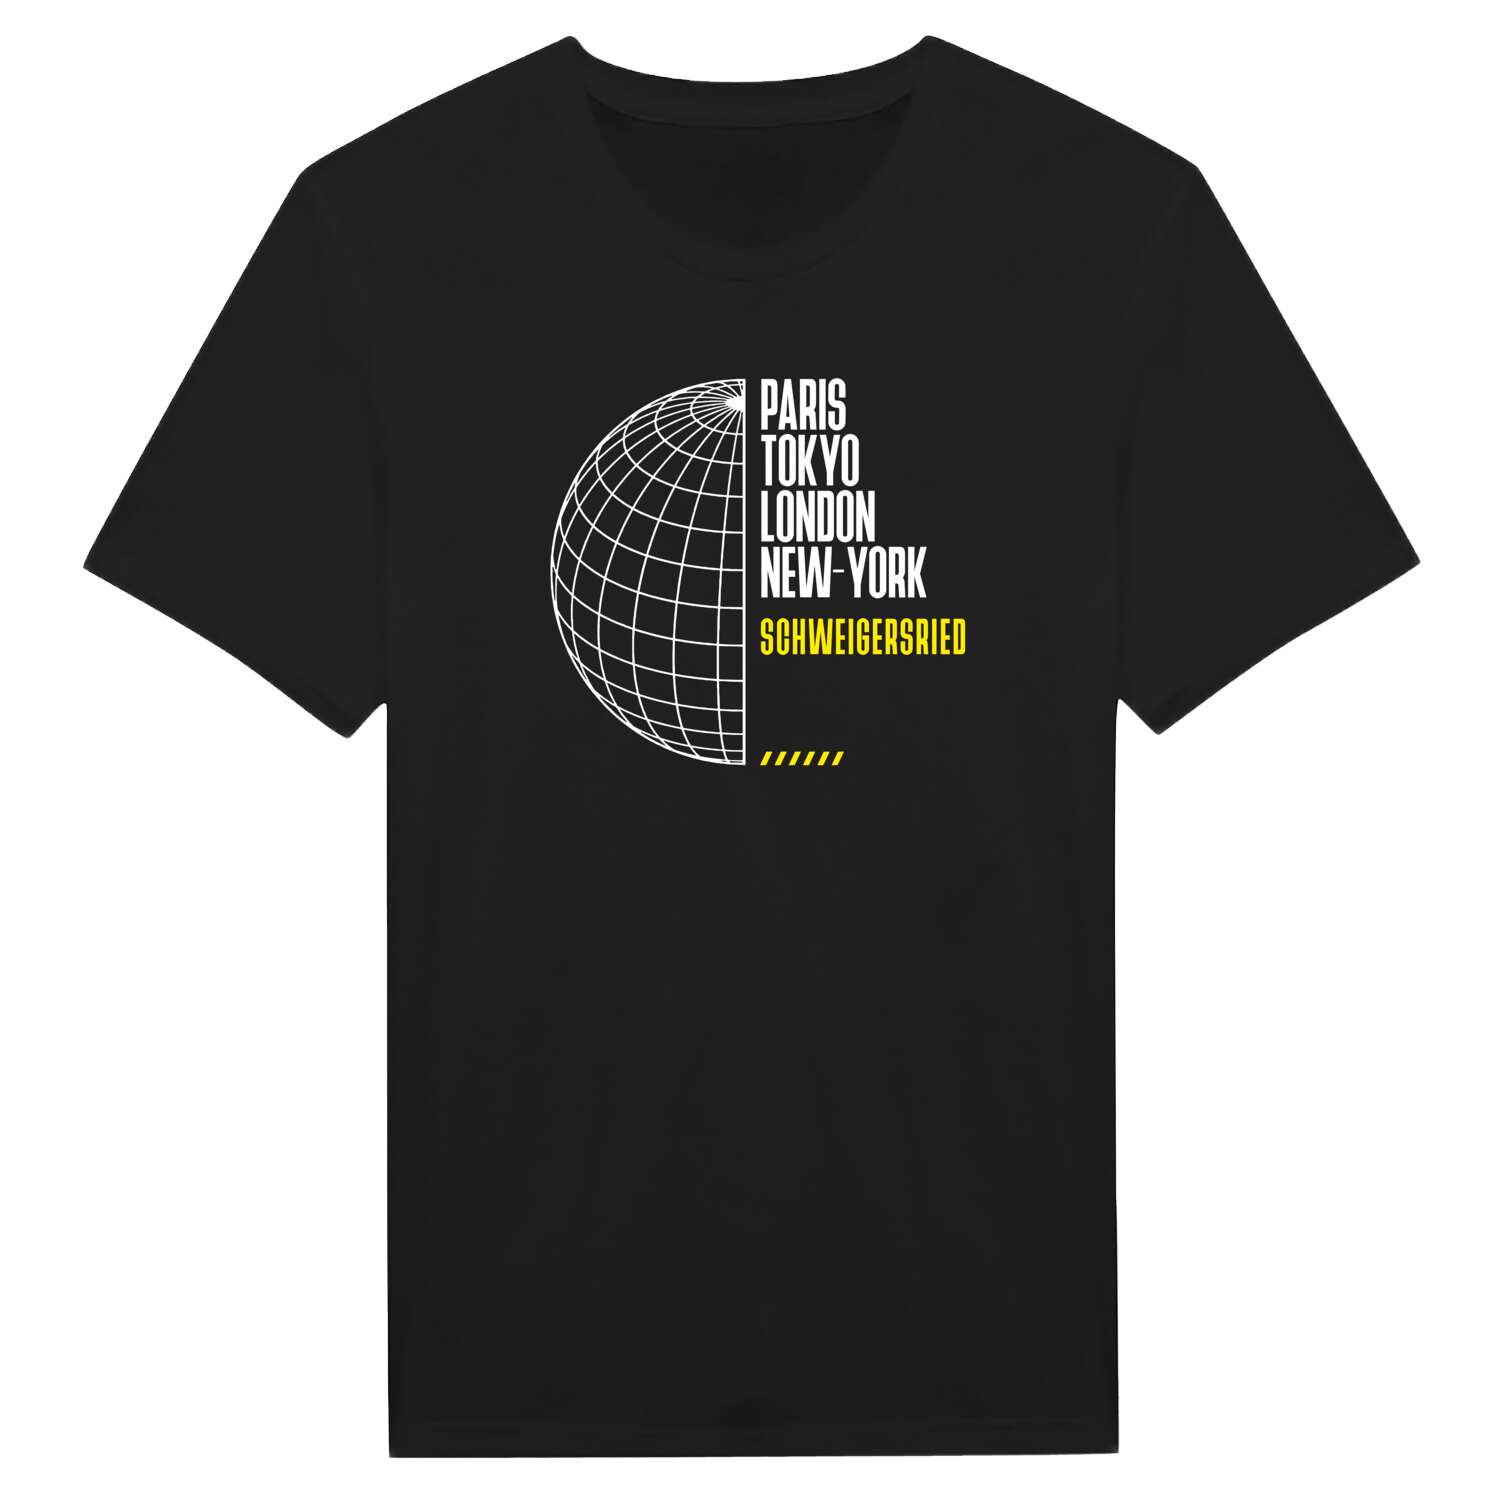 Schweigersried T-Shirt »Paris Tokyo London«